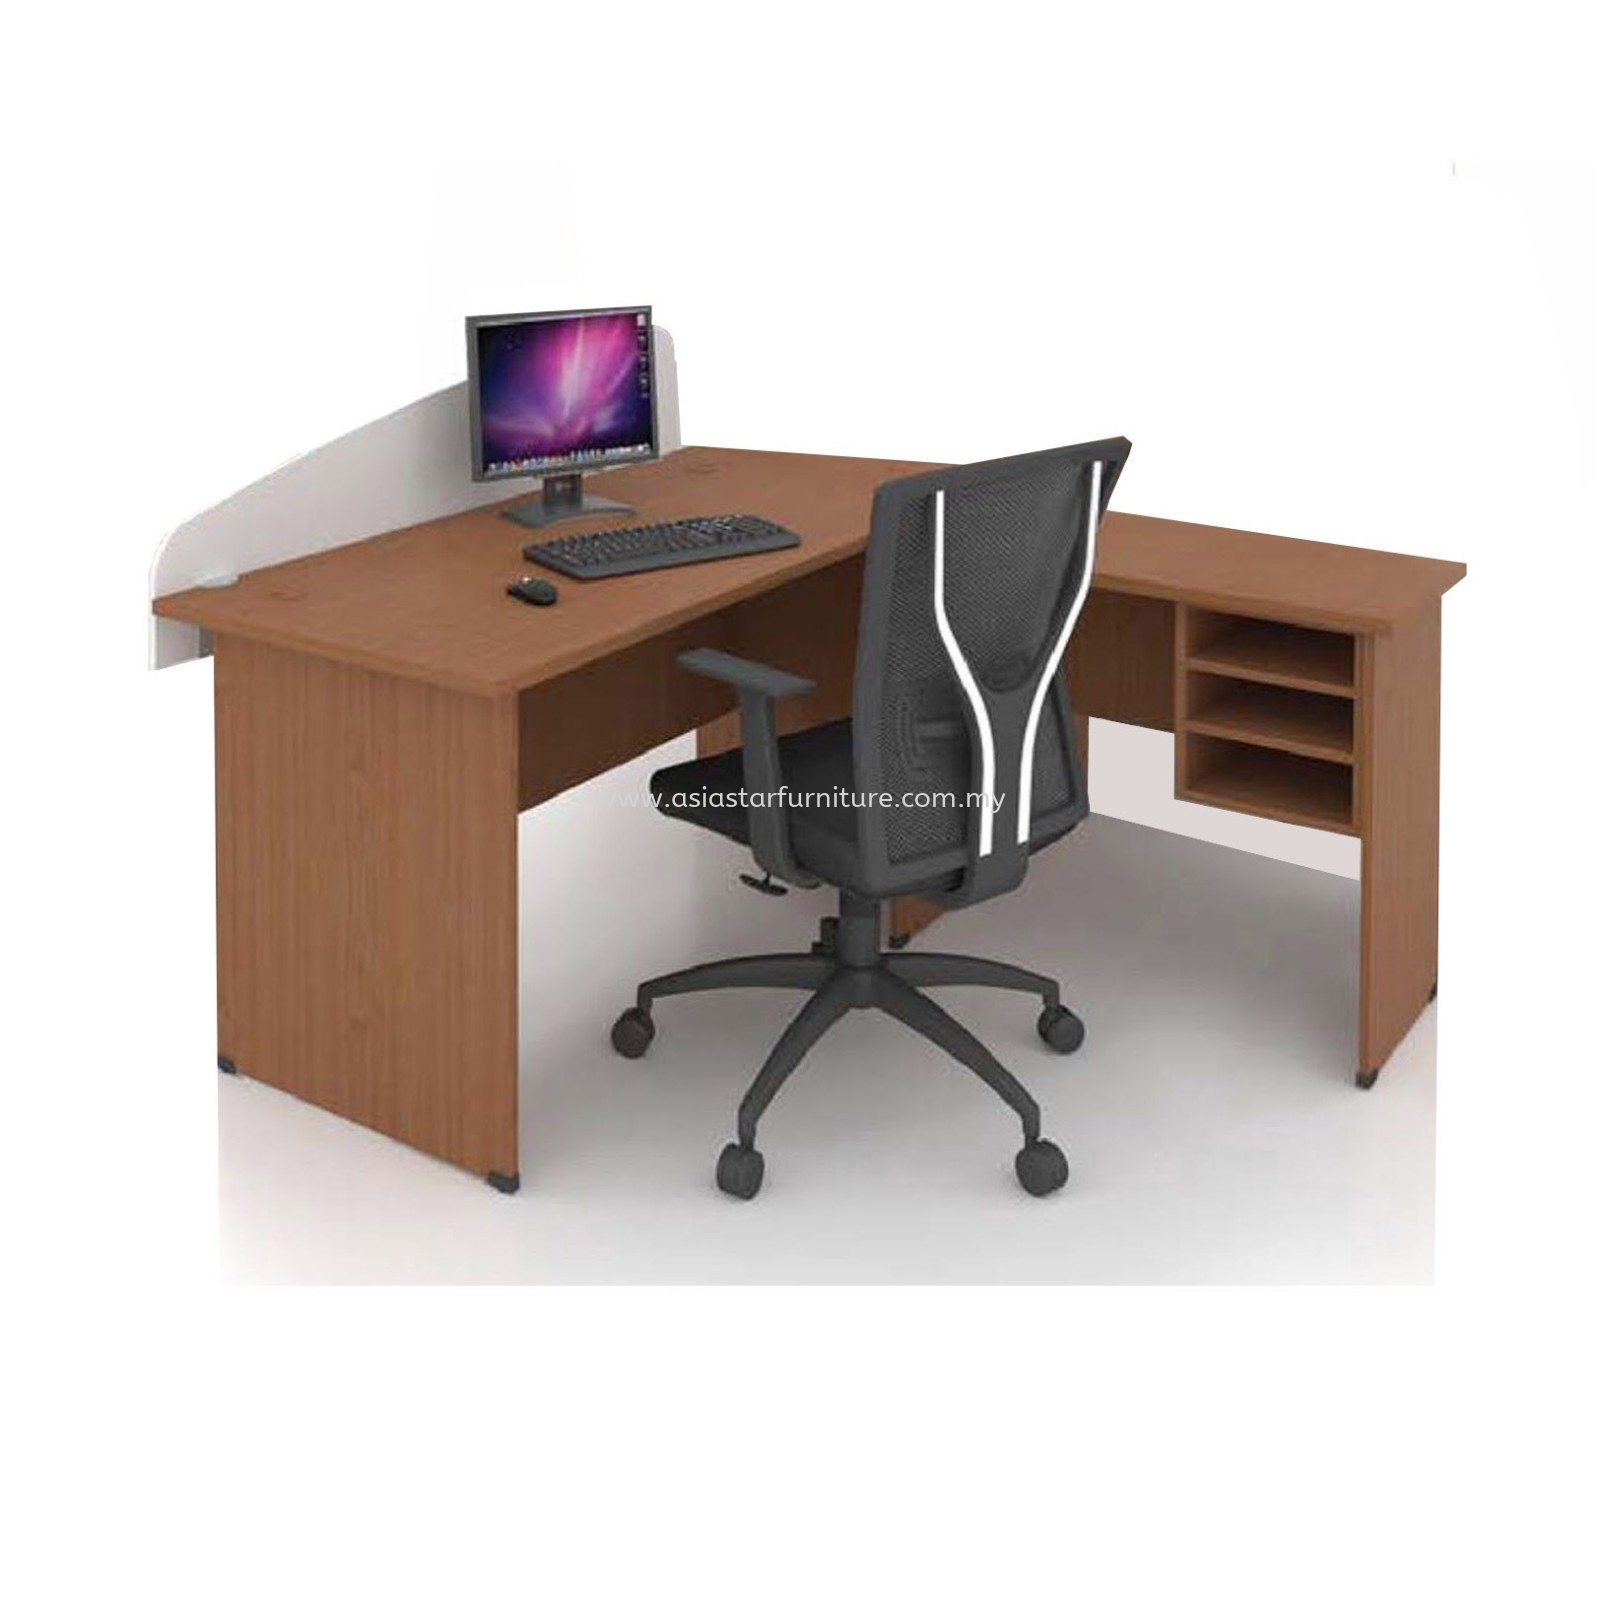 FOBIS 4' OFFICE TABLE C/W SIDE TABLE & RETURN RACK - office table Mont Kiara | office table Sri Hartamas | office table Publika | office table Solaris Dutamas